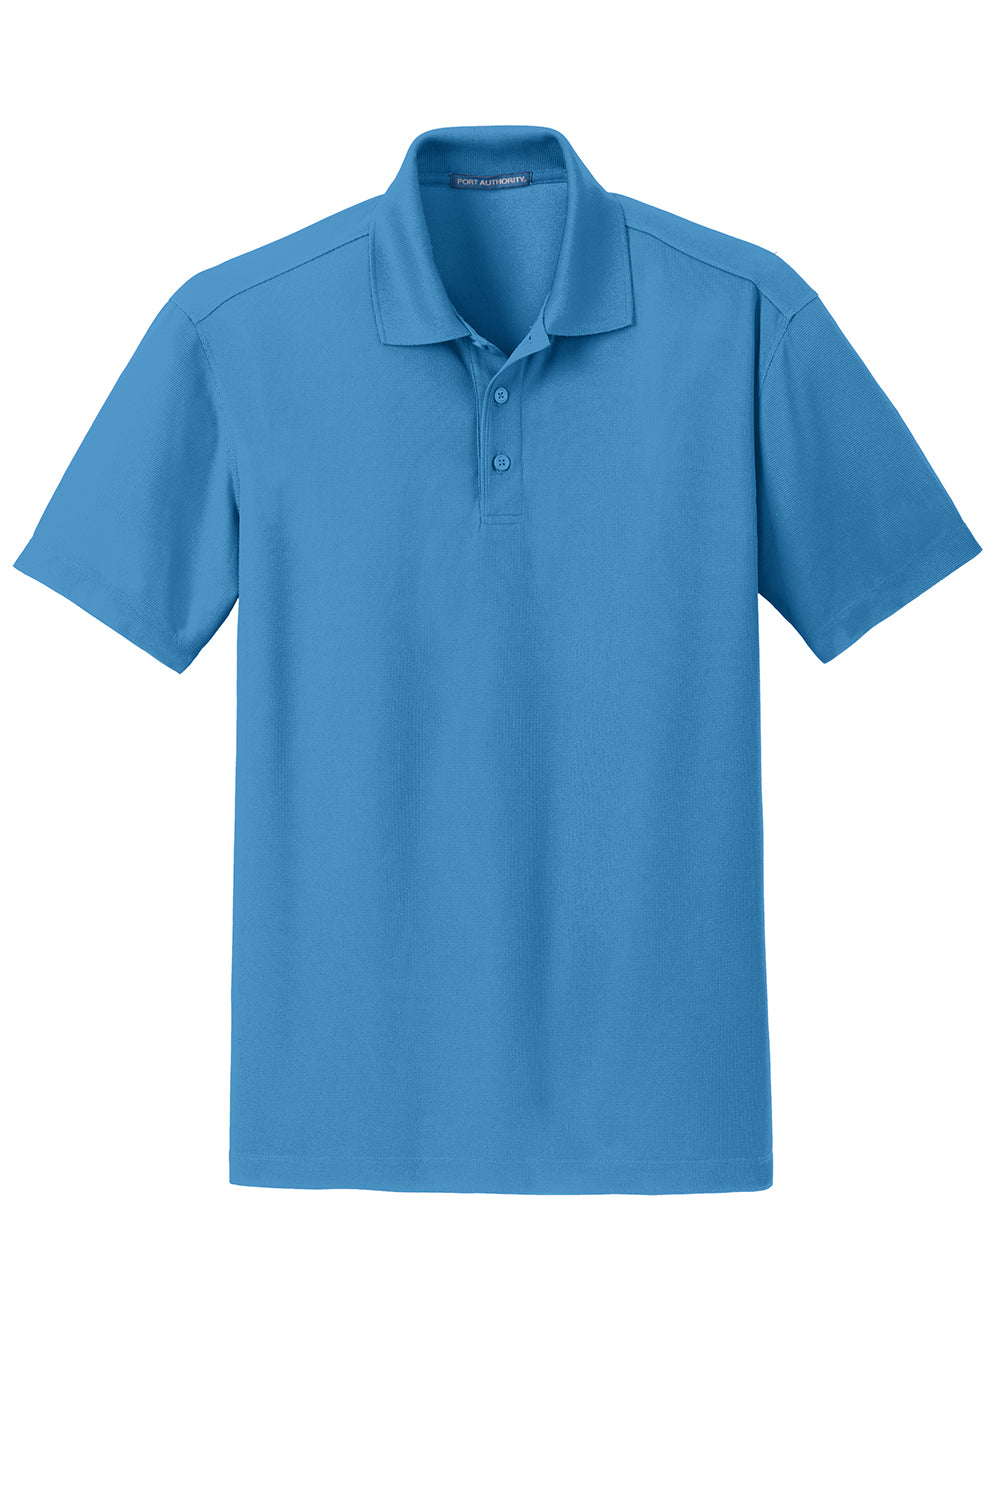 Port Authority K572 Mens Dry Zone Moisture Wicking Short Sleeve Polo Shirt Celadon Blue Flat Front